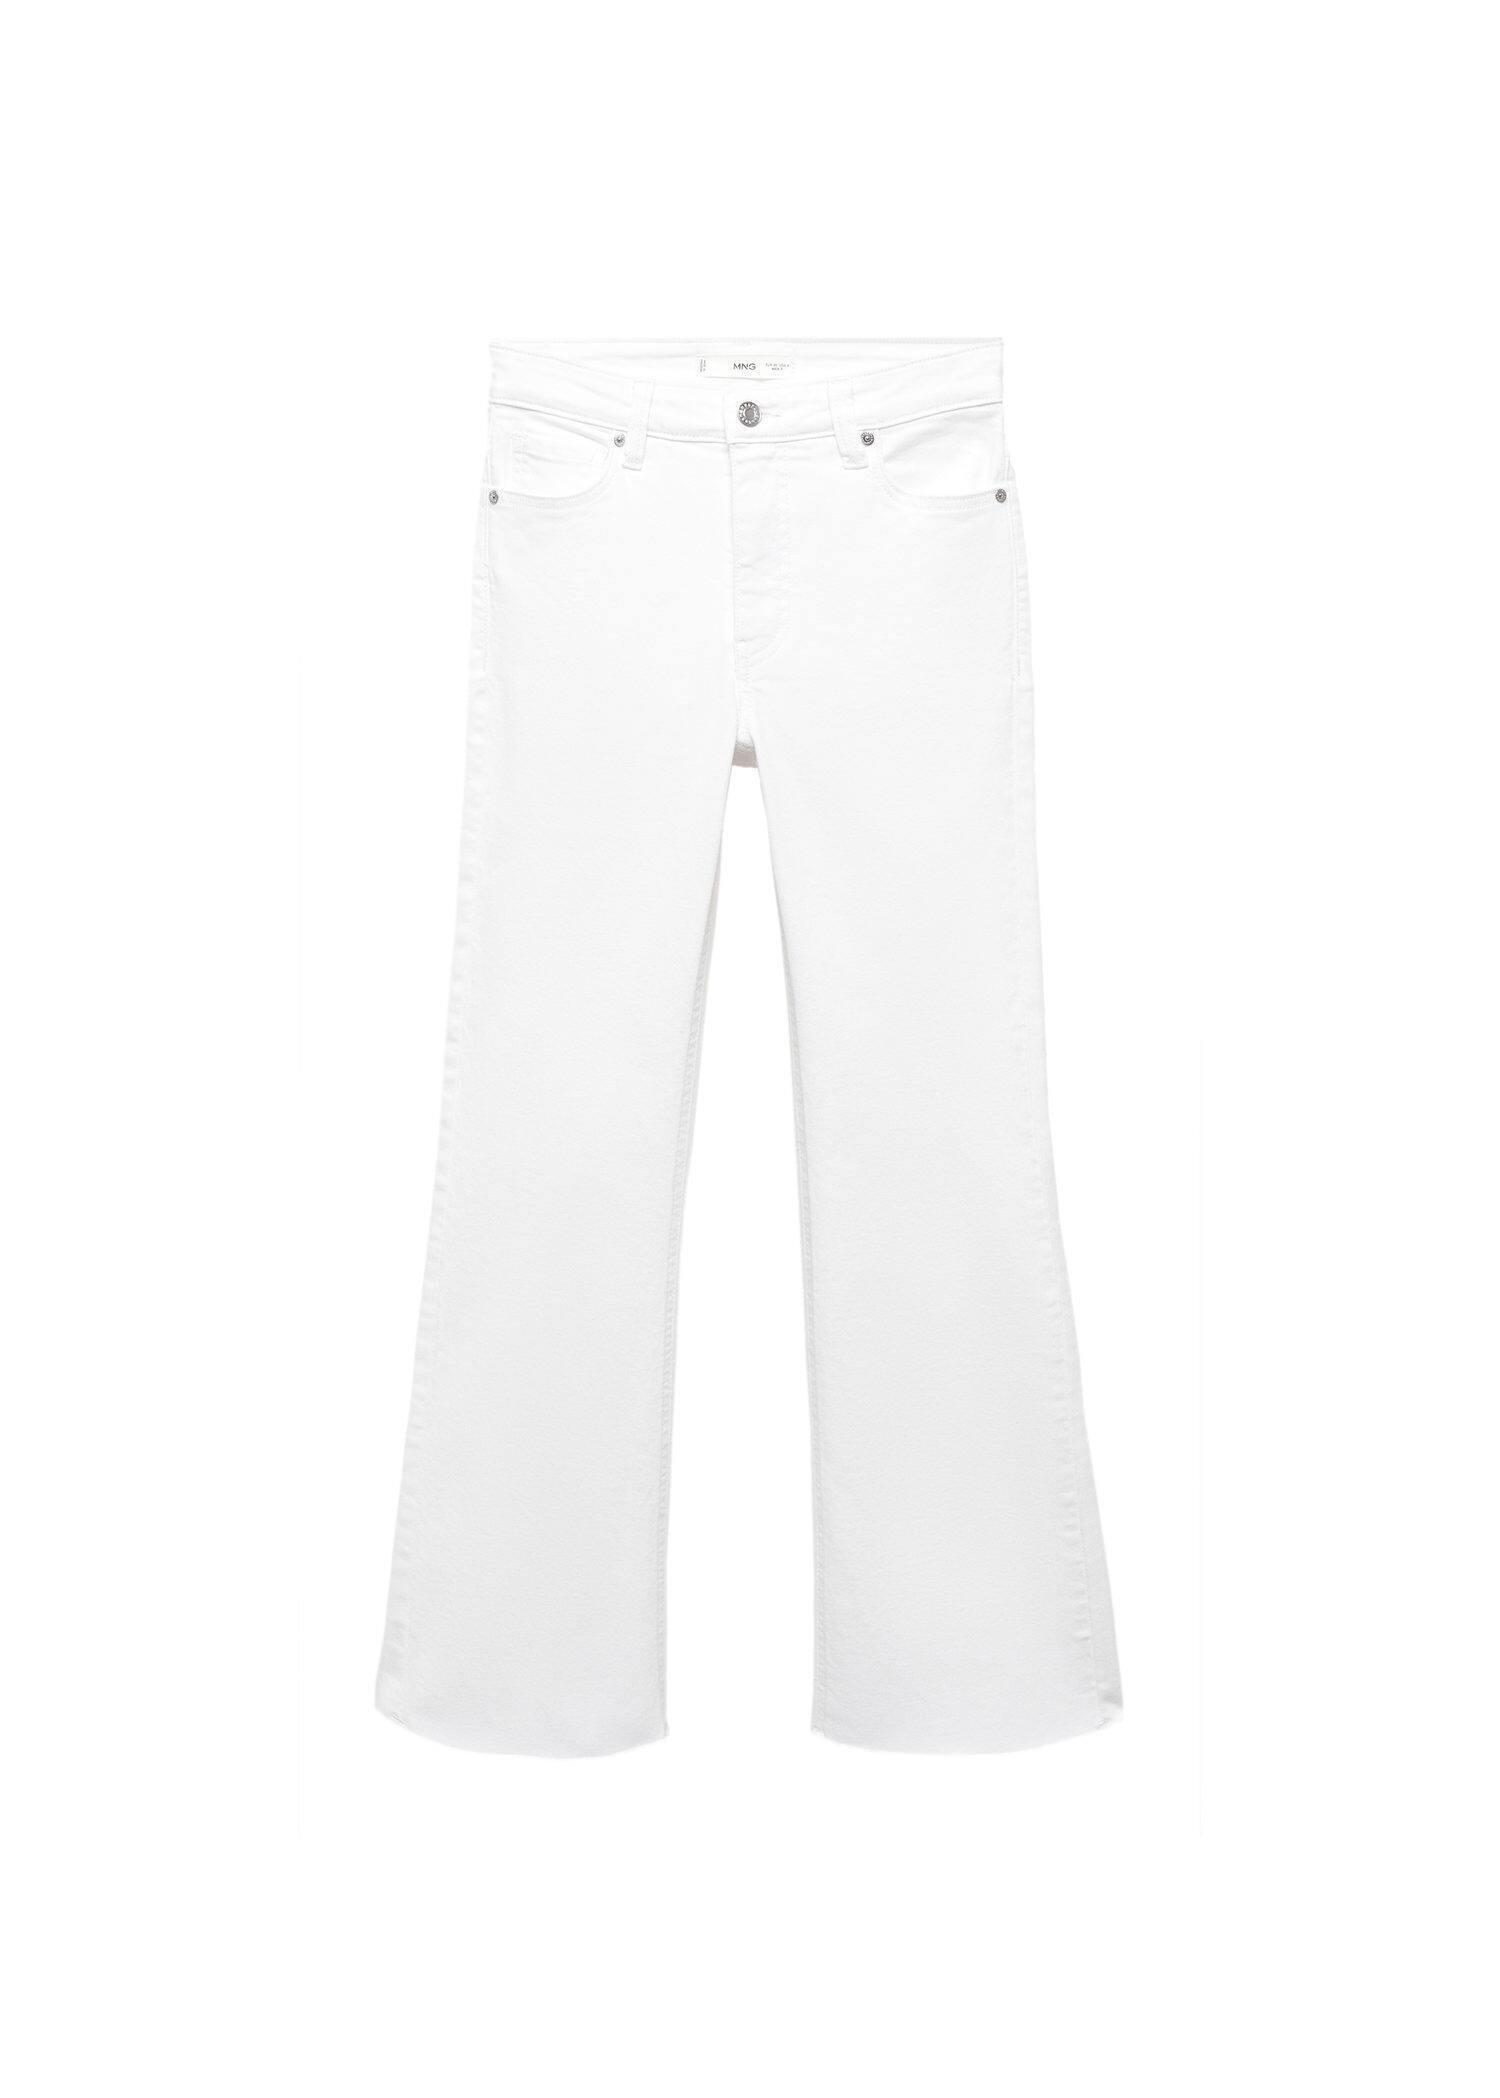 Mango - White Crop Flared Jeans